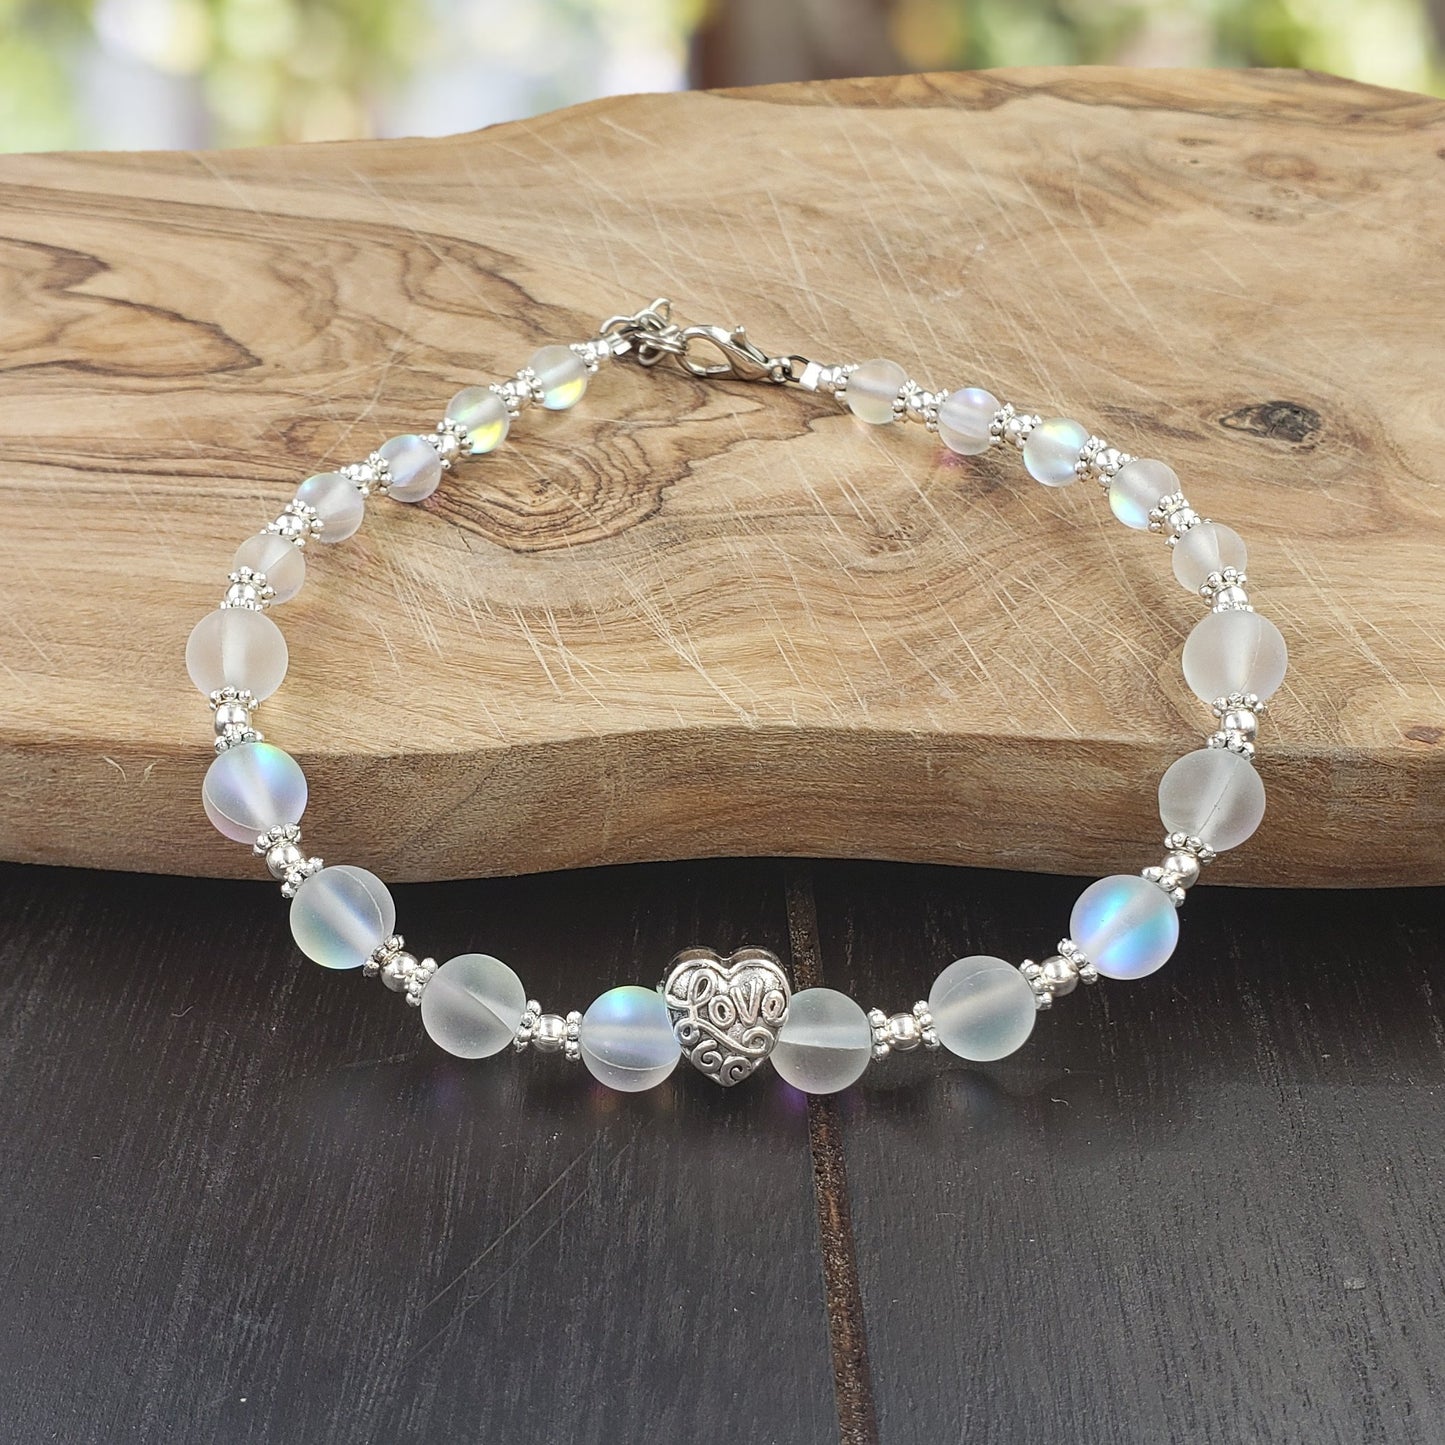 BESHEEK Silvertone and Clear AB frosted mermaid glass "love" heart Bracelet| Handmade Hypoallergenic Boho Beach Gala Wedding Style Jewelry